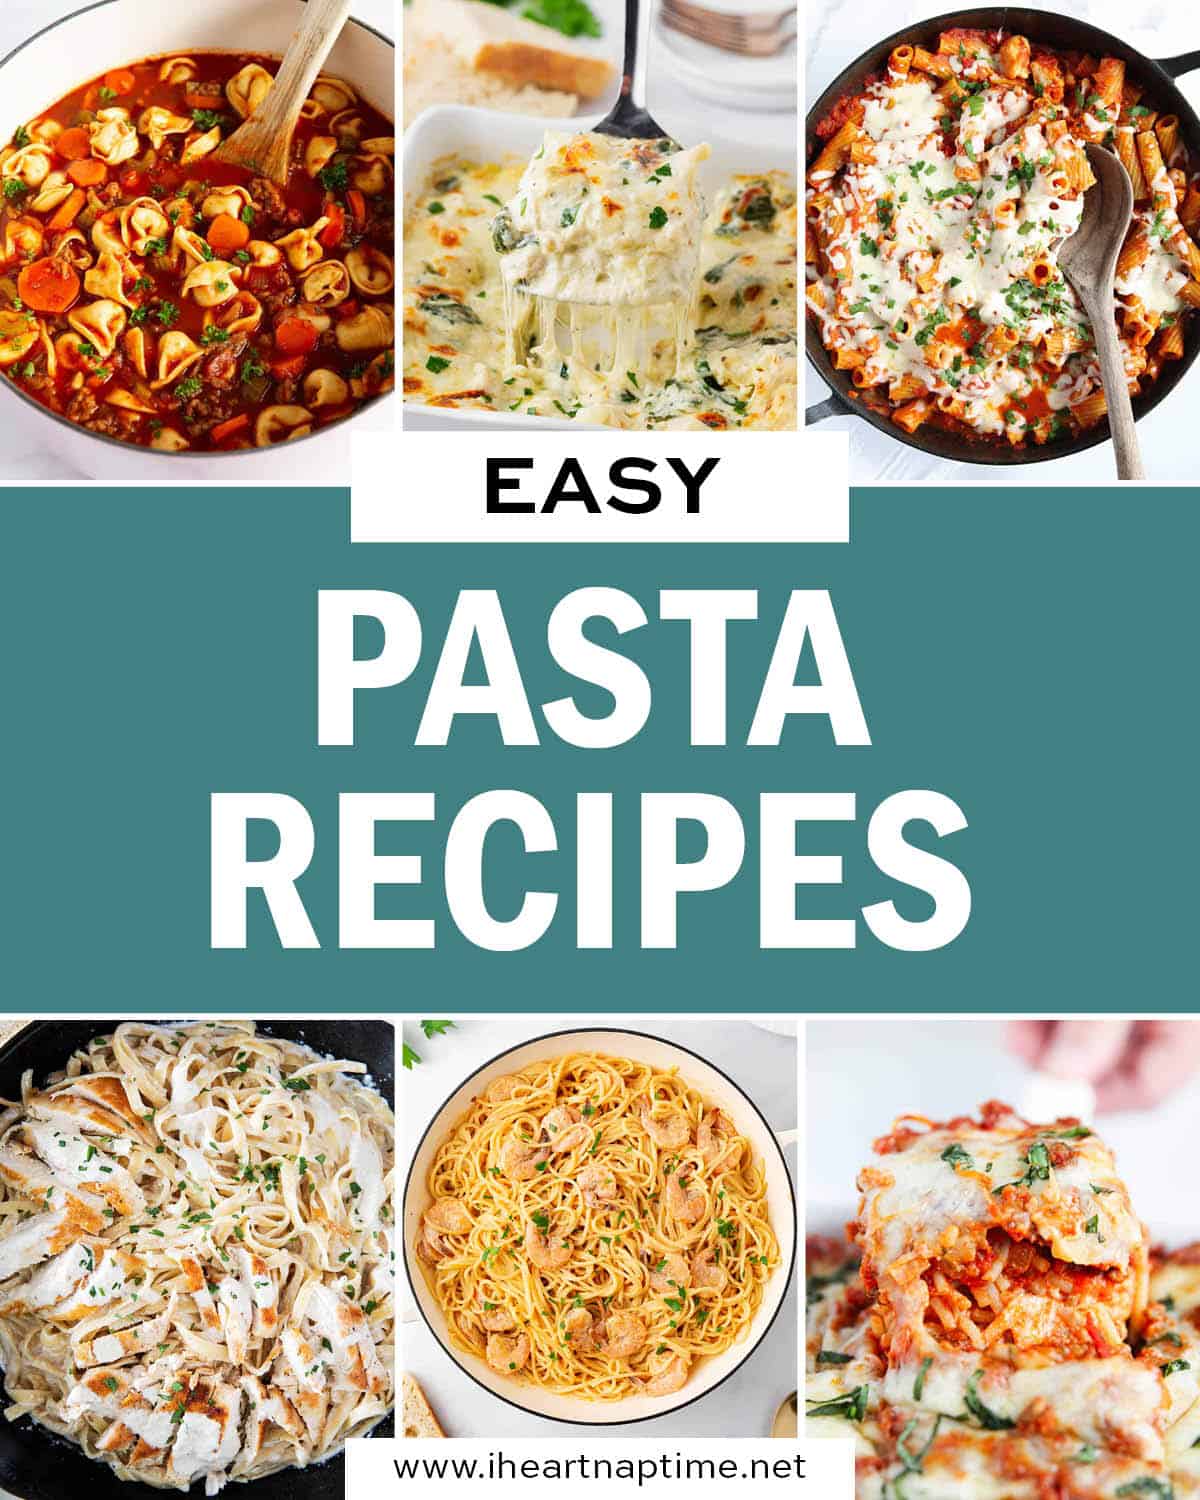 Easy pasta recipes collage.